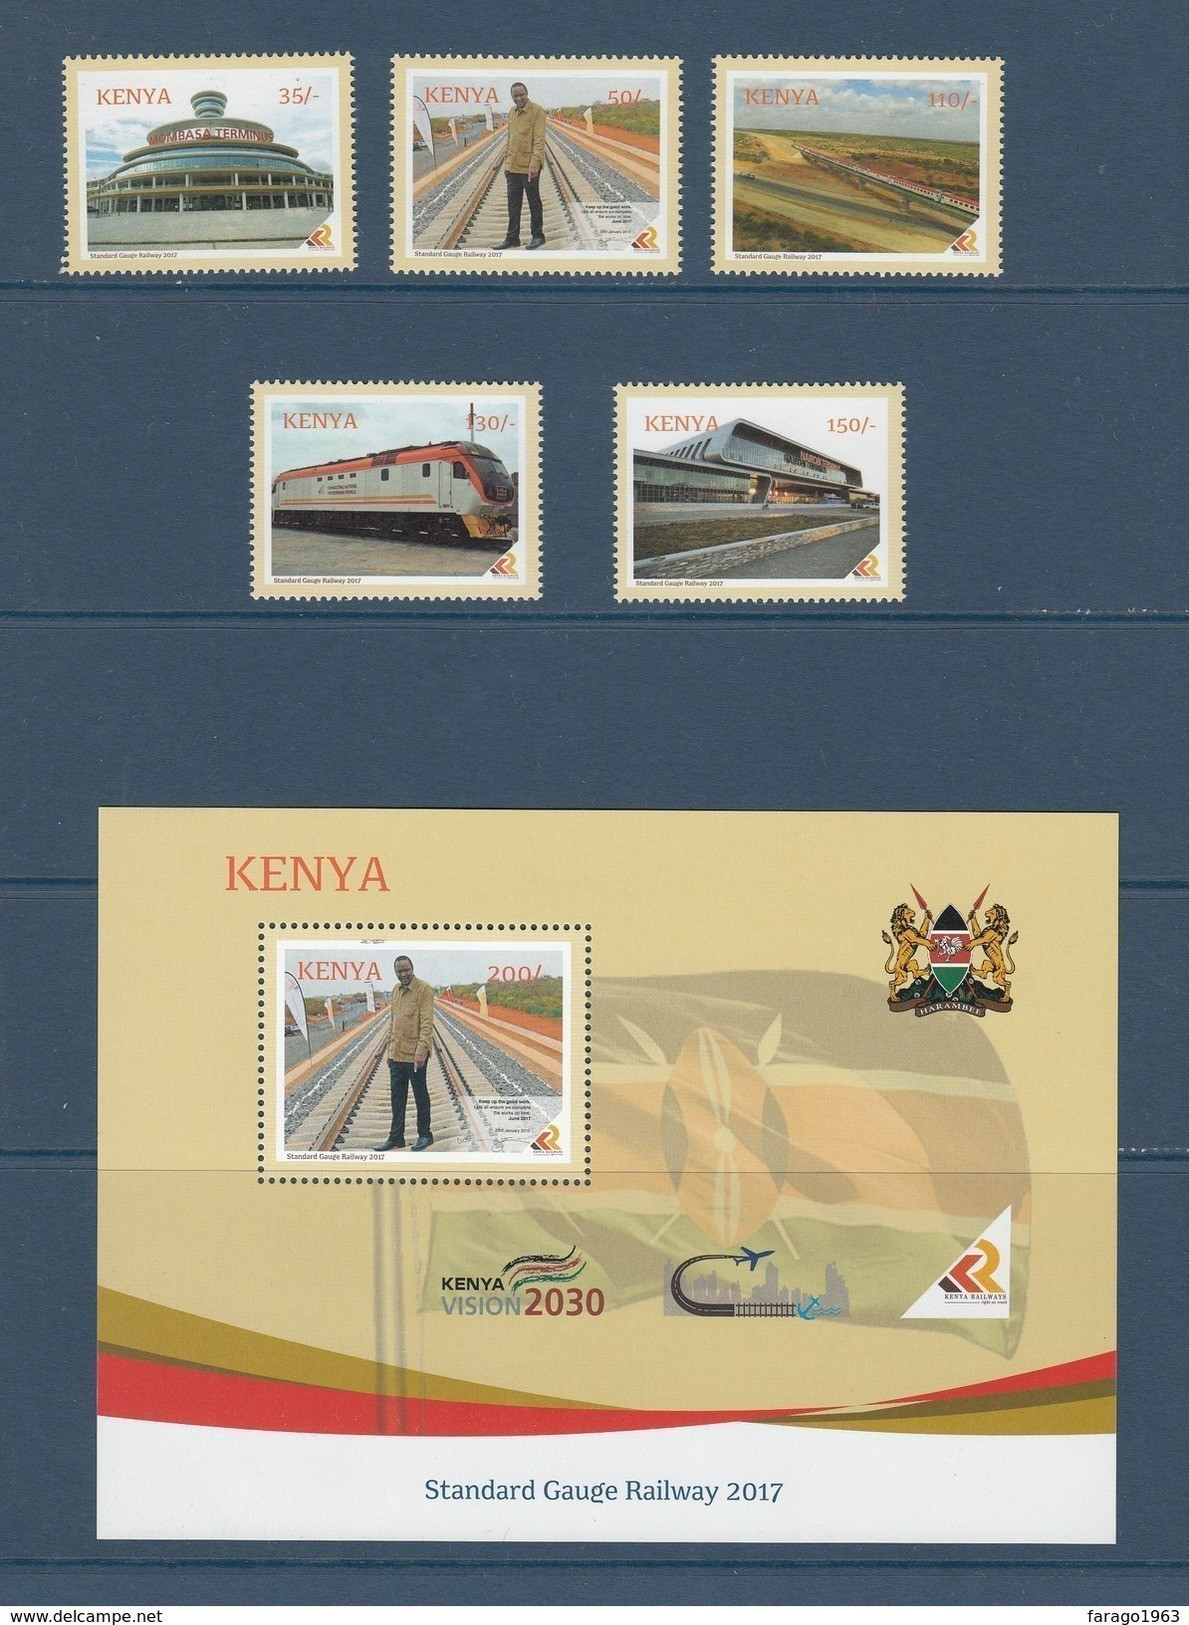 2017 Kenya Standard Gauge Railway "SGR" - Built By China Complete Set Of 5 And Souvenir Sheet MNH - Kenya (1963-...)